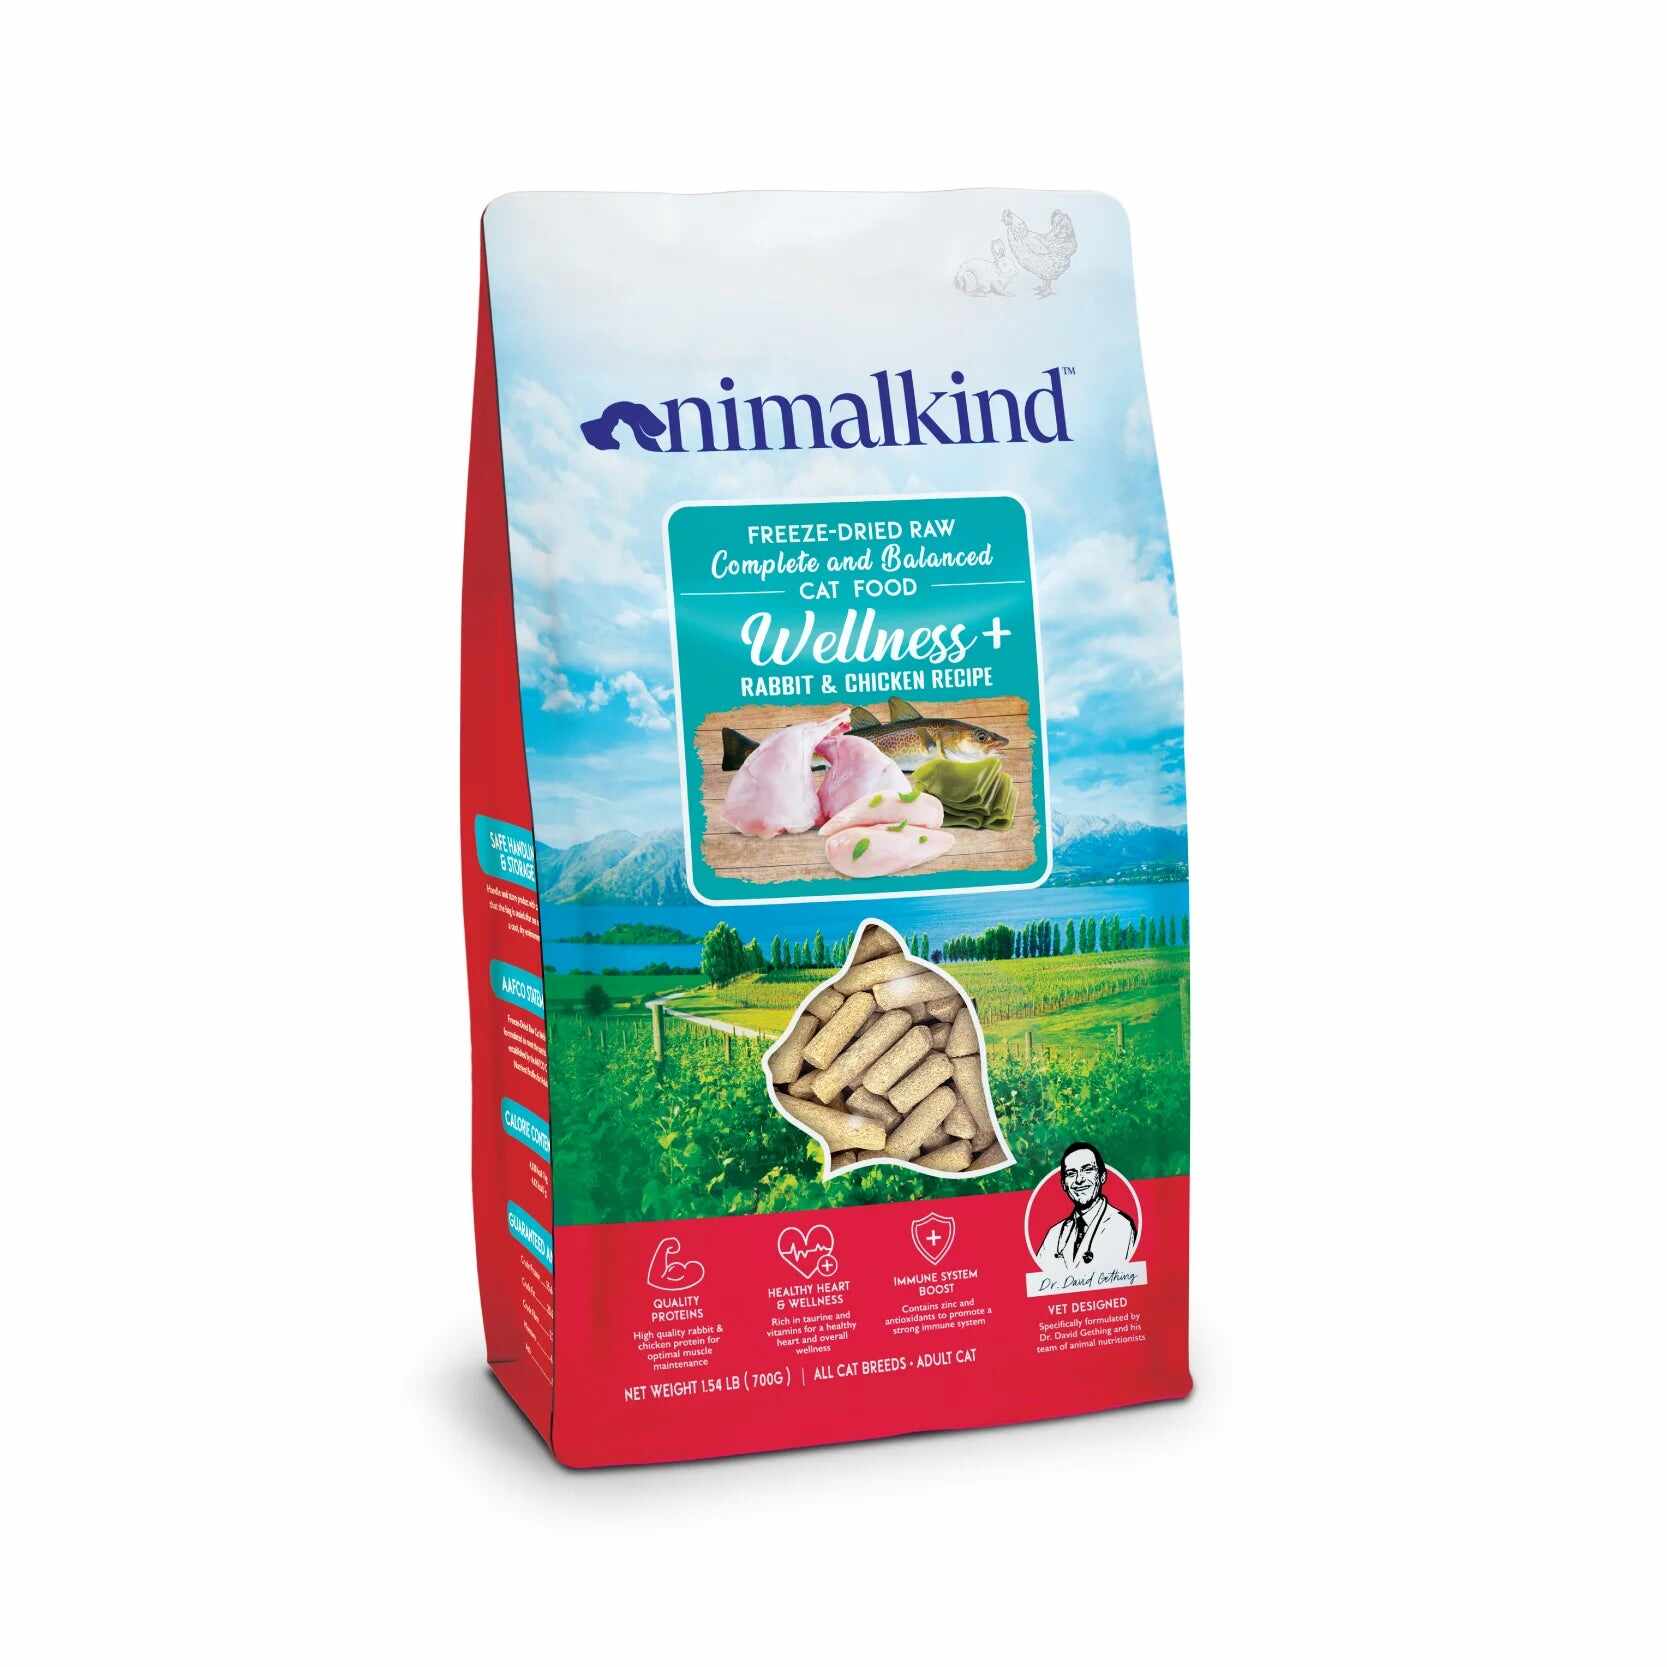 Animalkind Wellness+ Cat Food - Rabbit & Chicken Freeze-Dried Raw